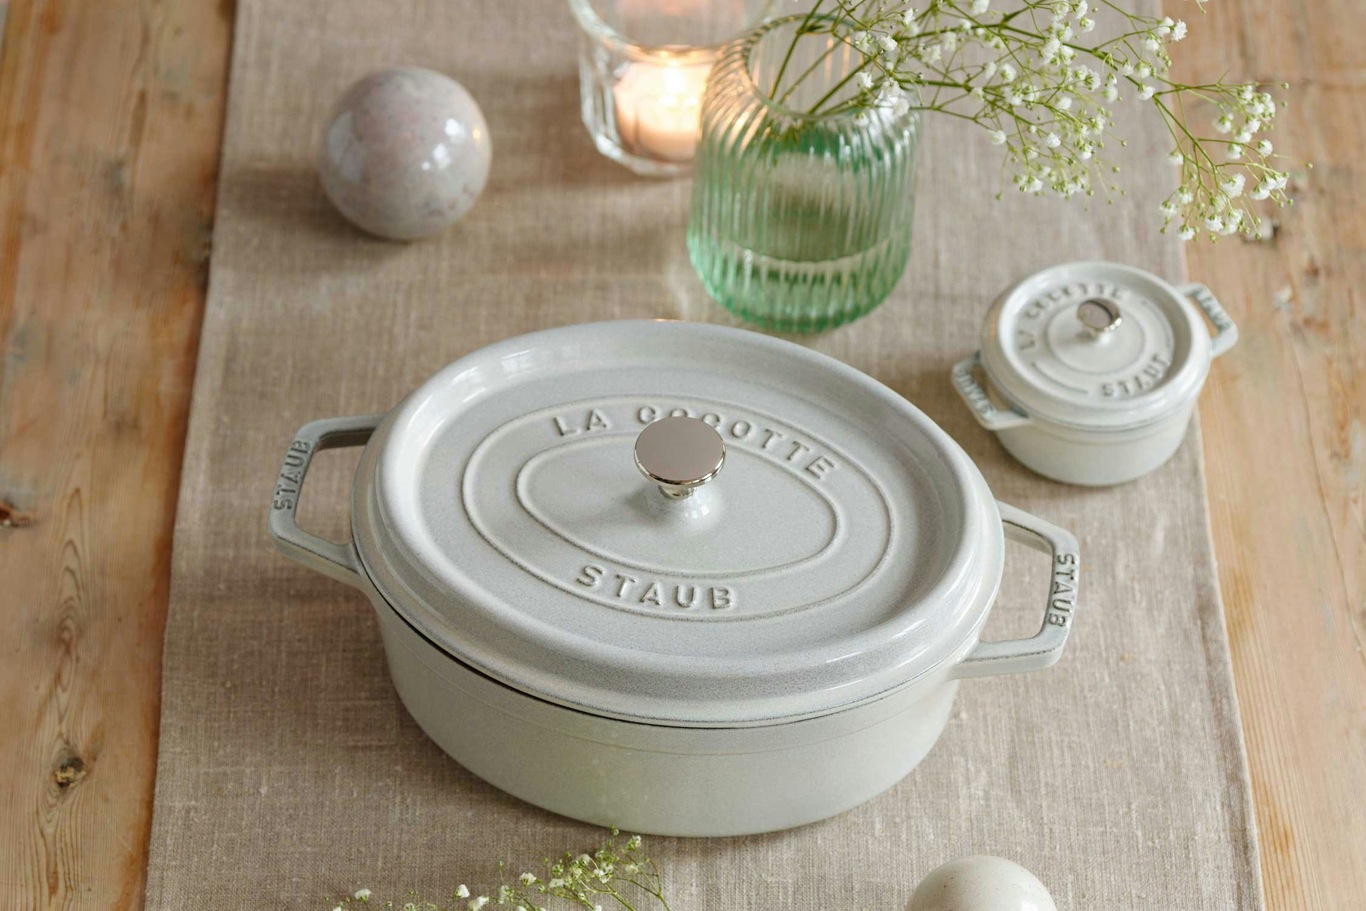 https://royaldesign.com/image/11/staub-oval-gryta-37-cm-white-truffle-8-l-2?w=800&quality=80